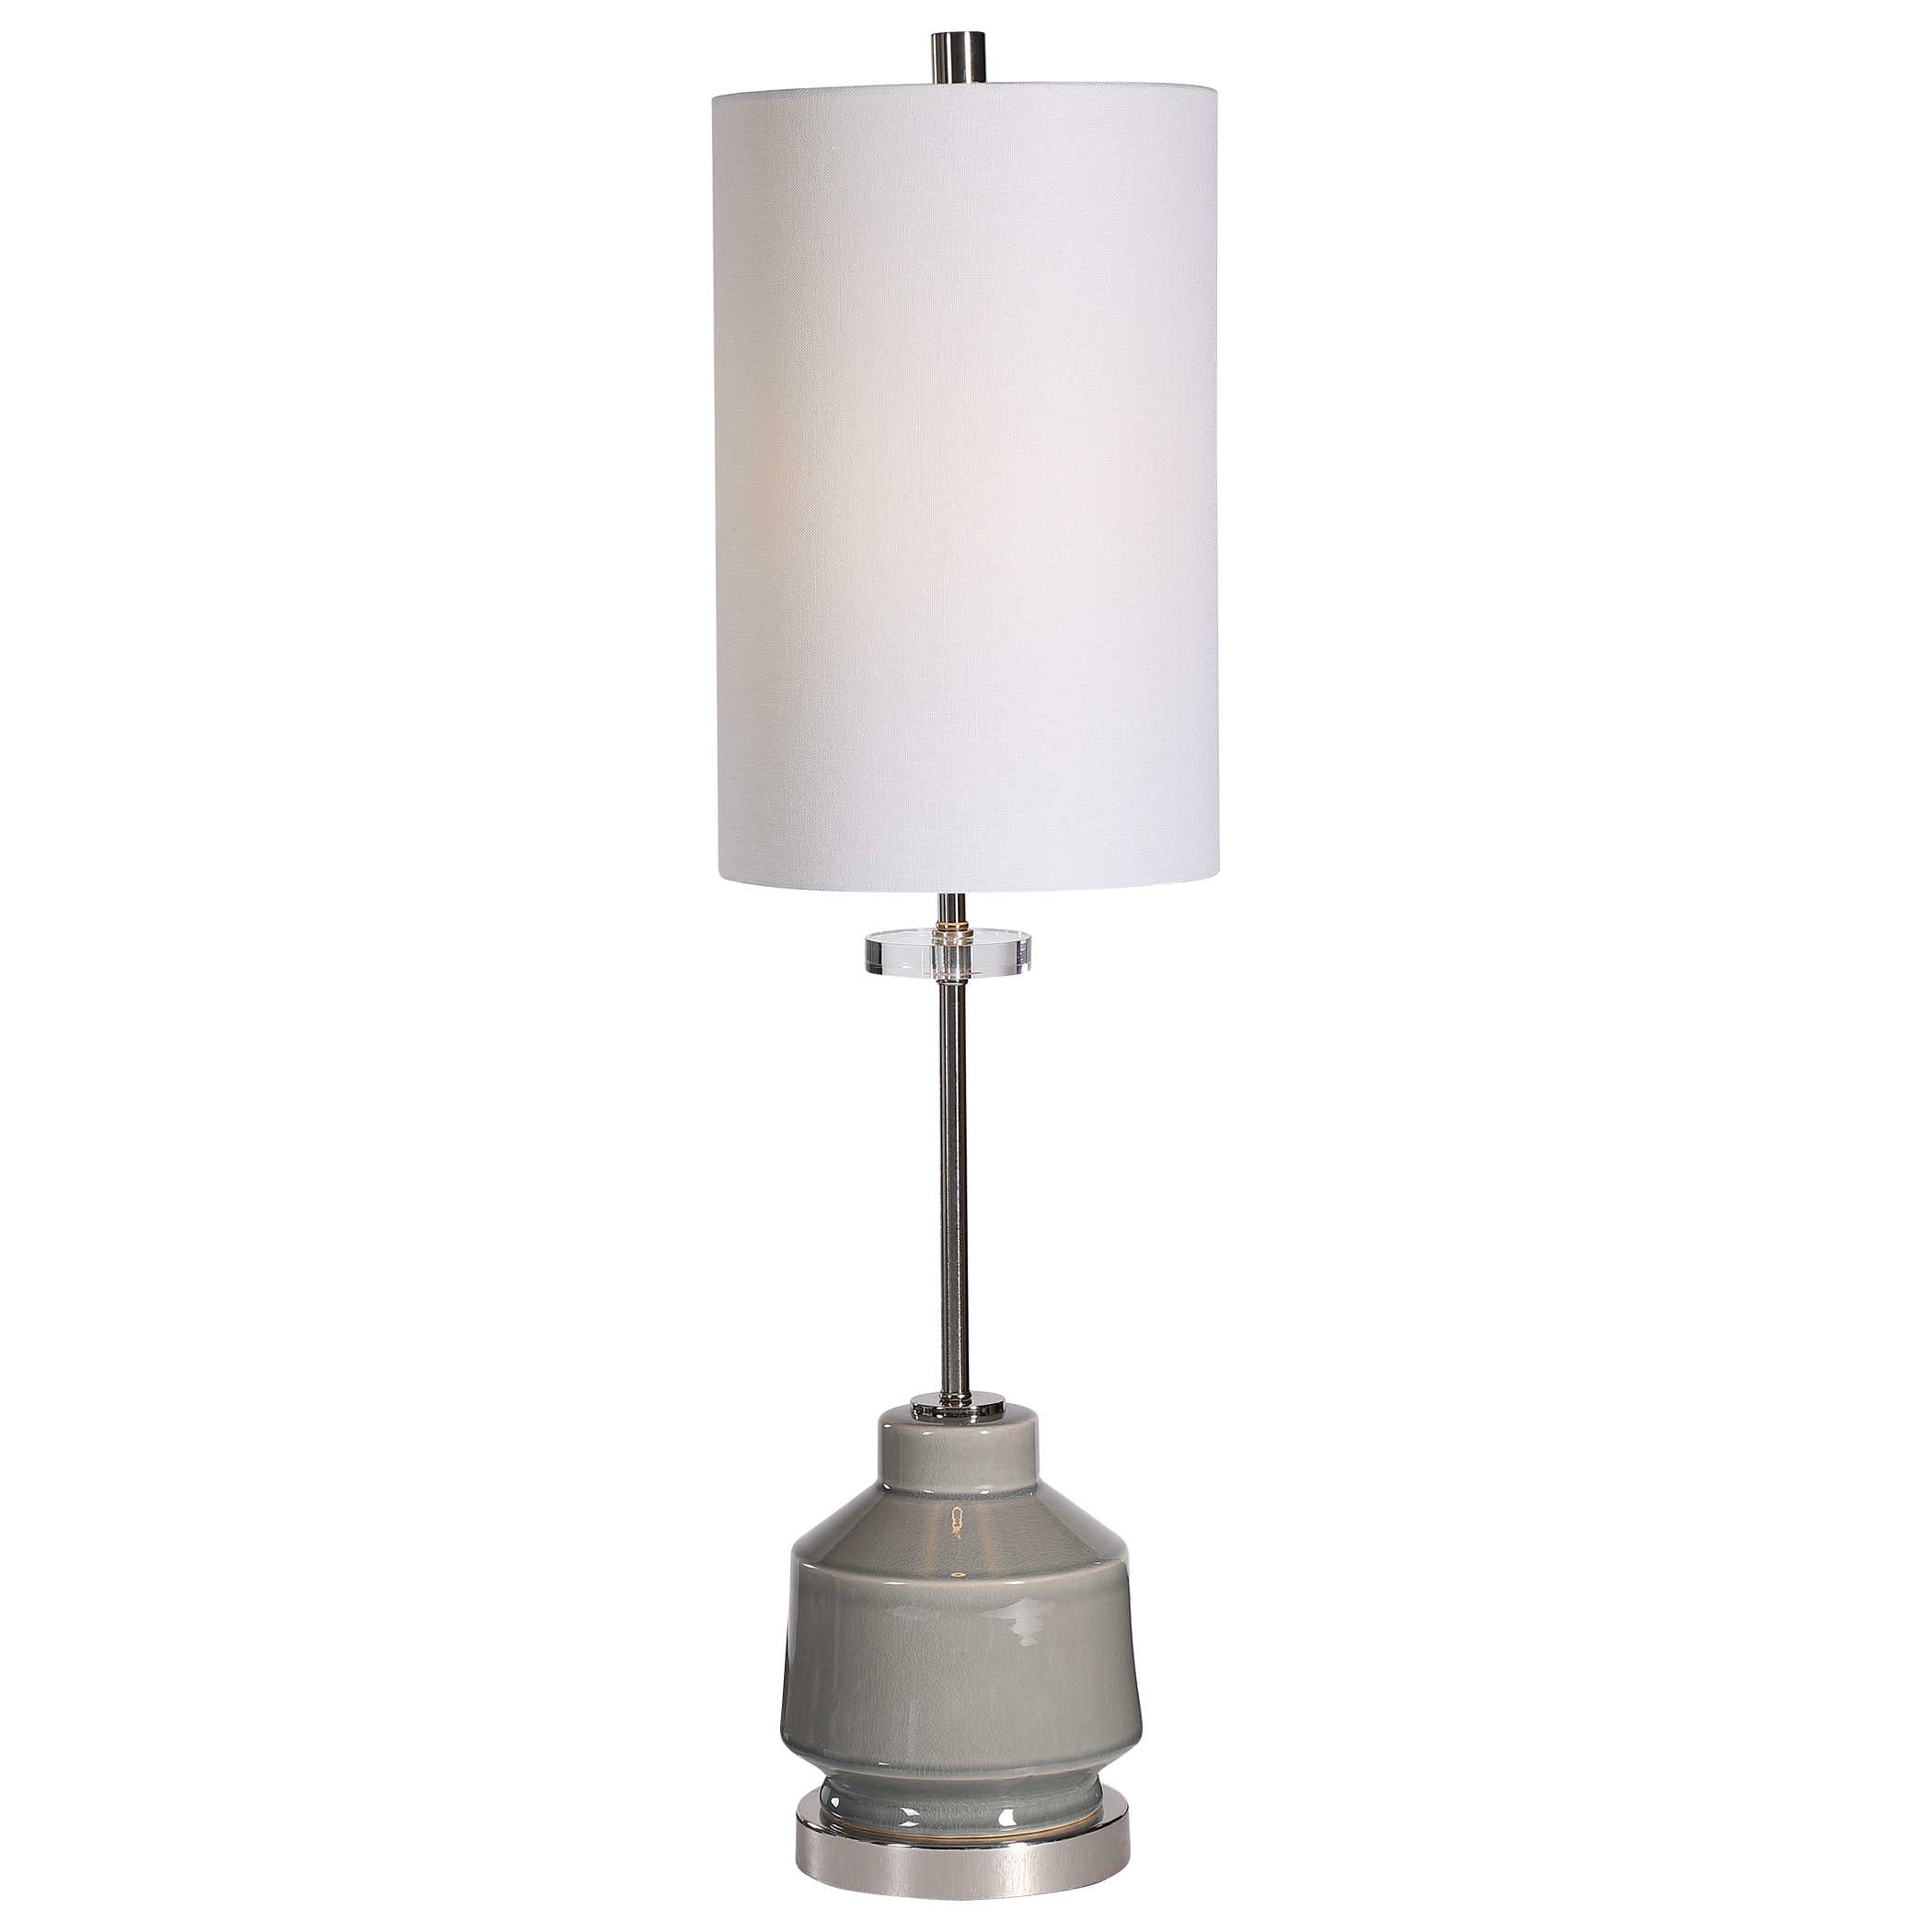 Лампа PORTER BUFFET LAMP 28429-1 Uttermost США